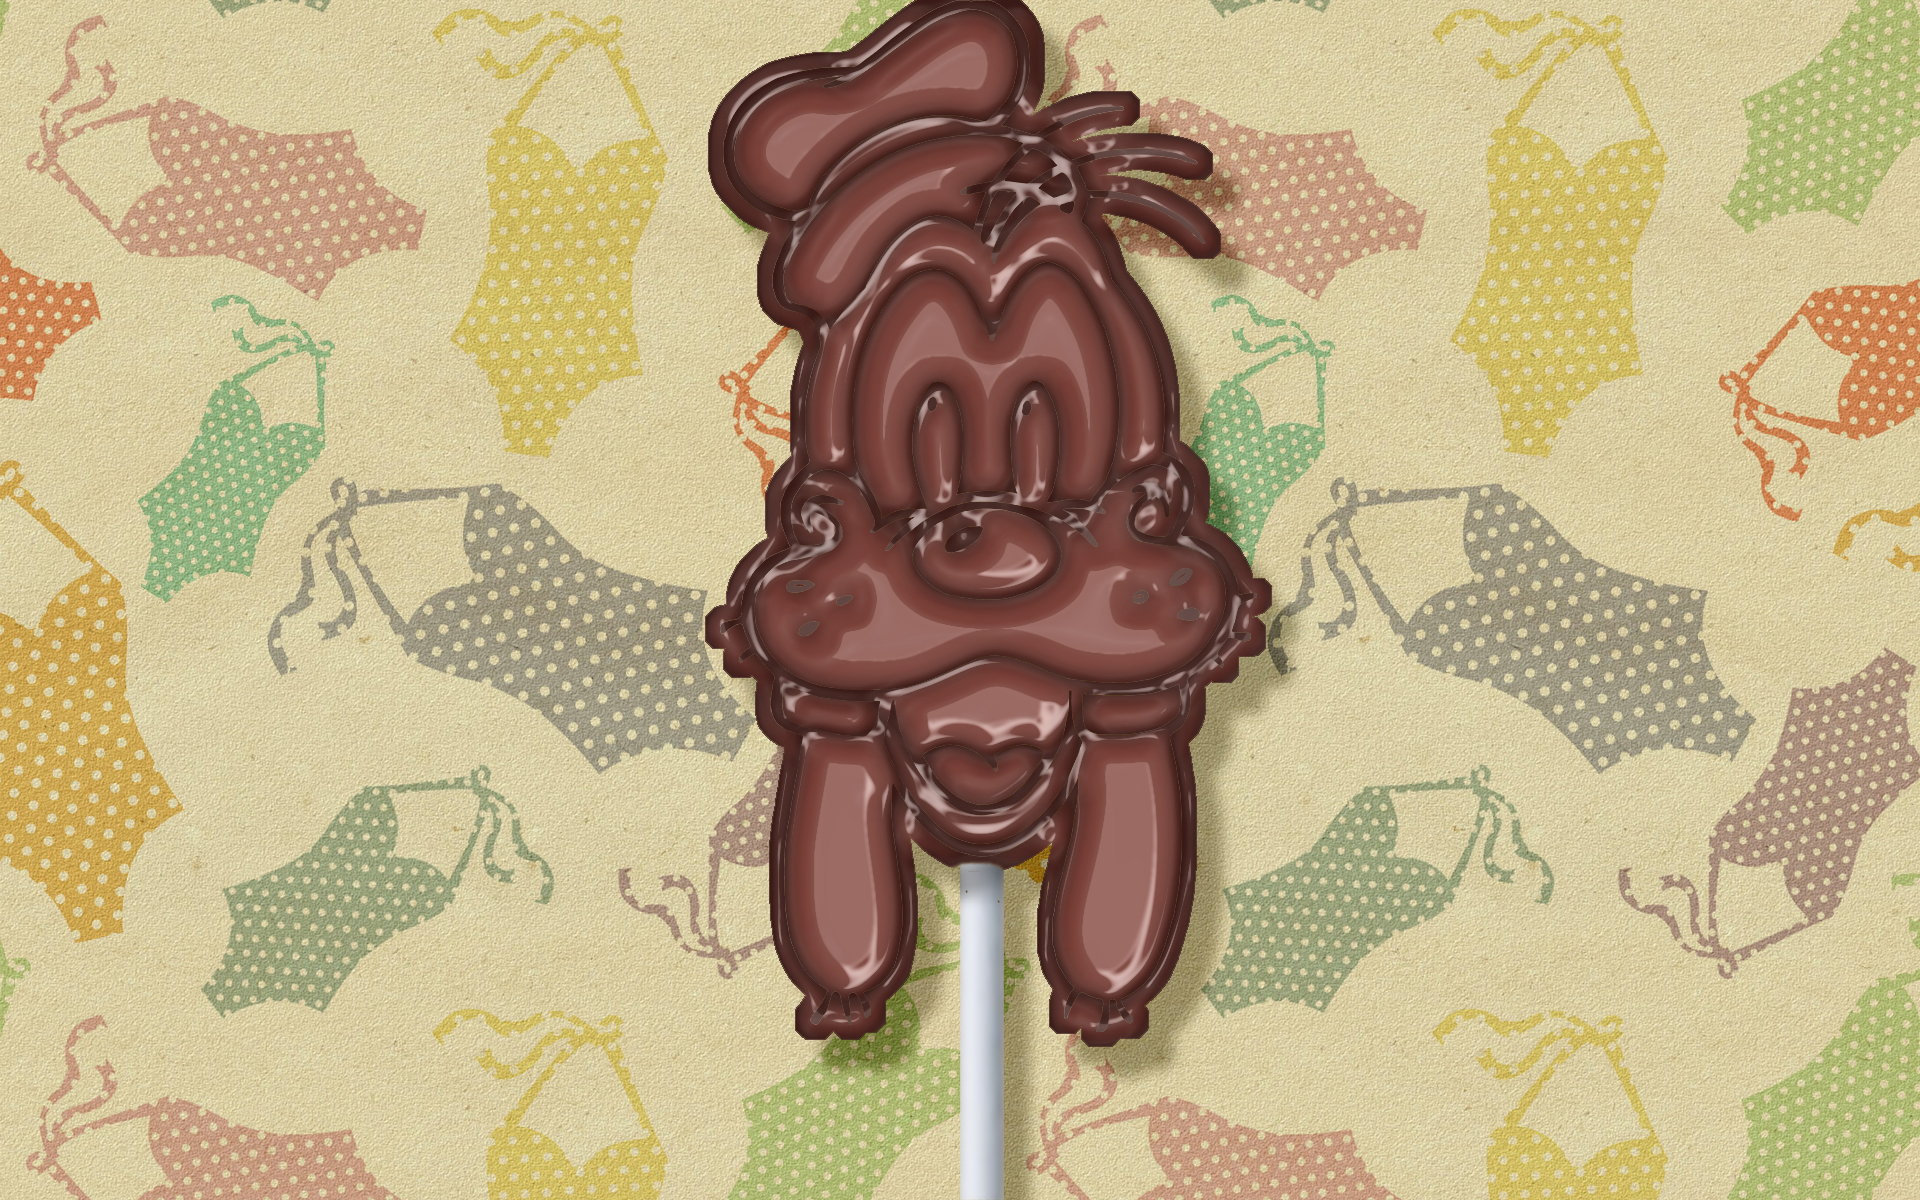 Fabio's Chocalate Candy Popsicle